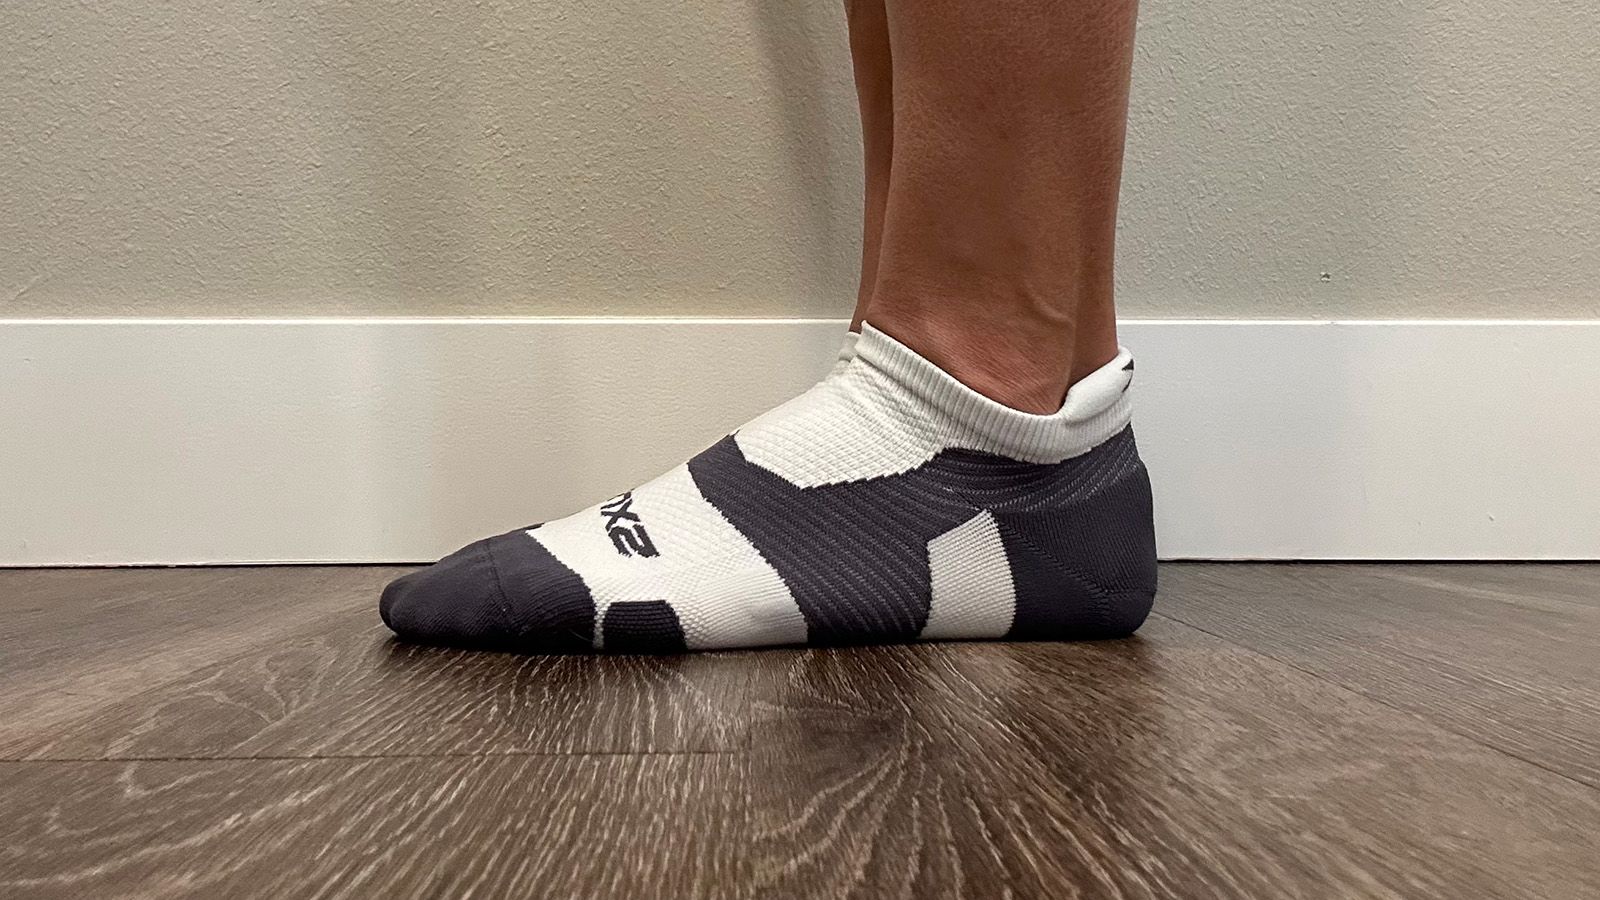 Men's MicroPillow Compression Knee-High Running Sock *Light Cushioning, Men's Socks